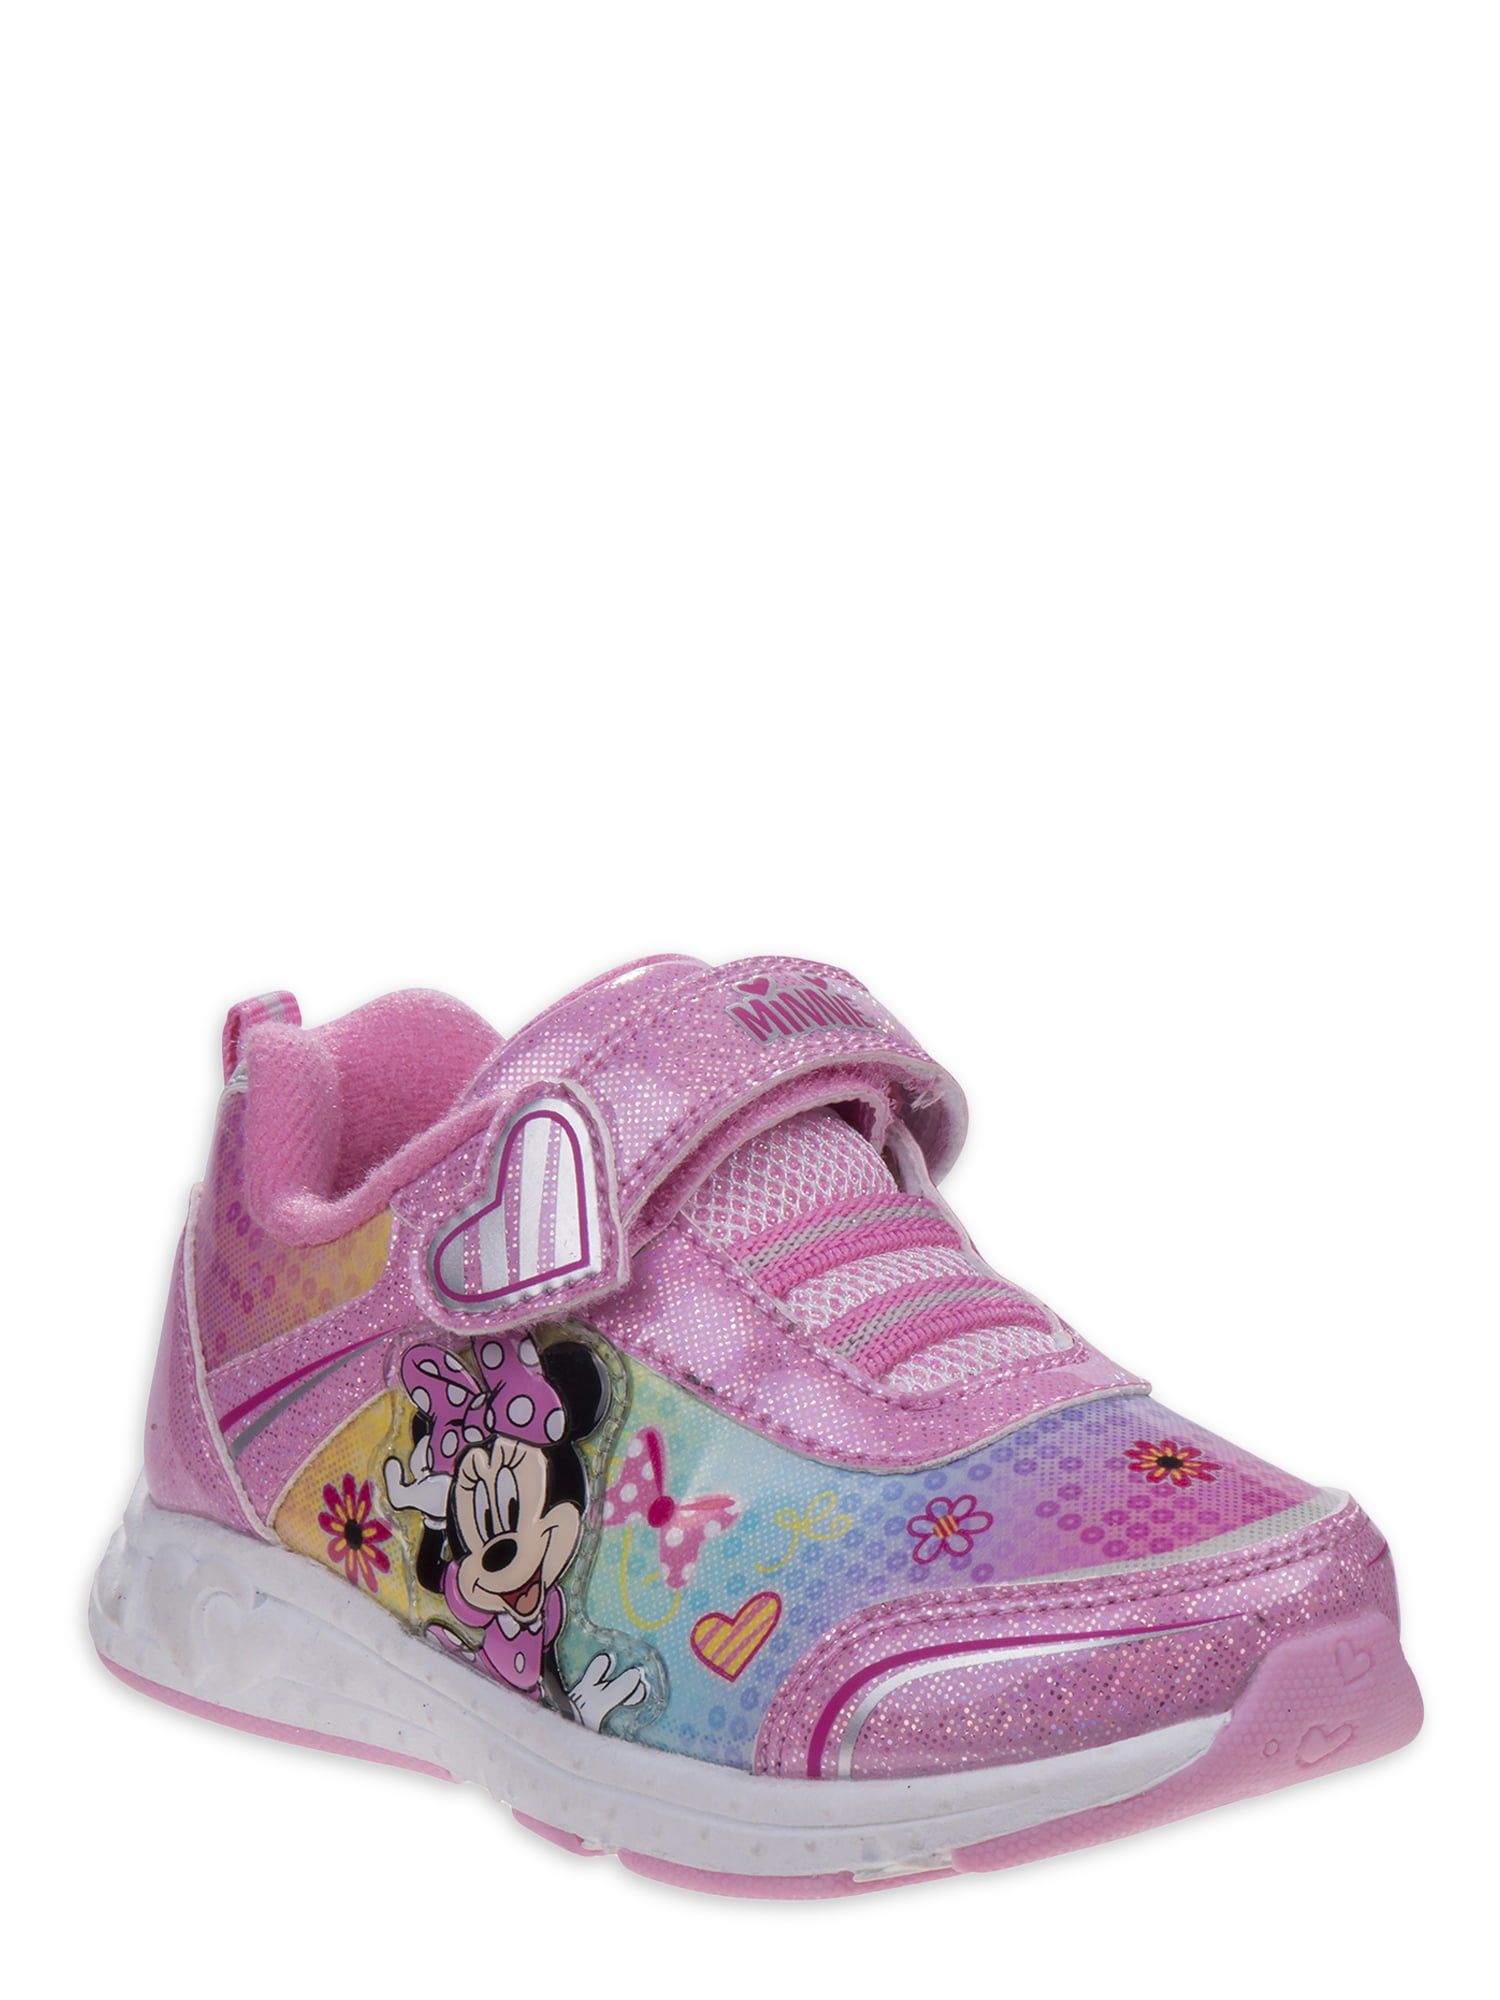 Pink Girls Minnie Light Up Sneakers Toddler/Little Kid 